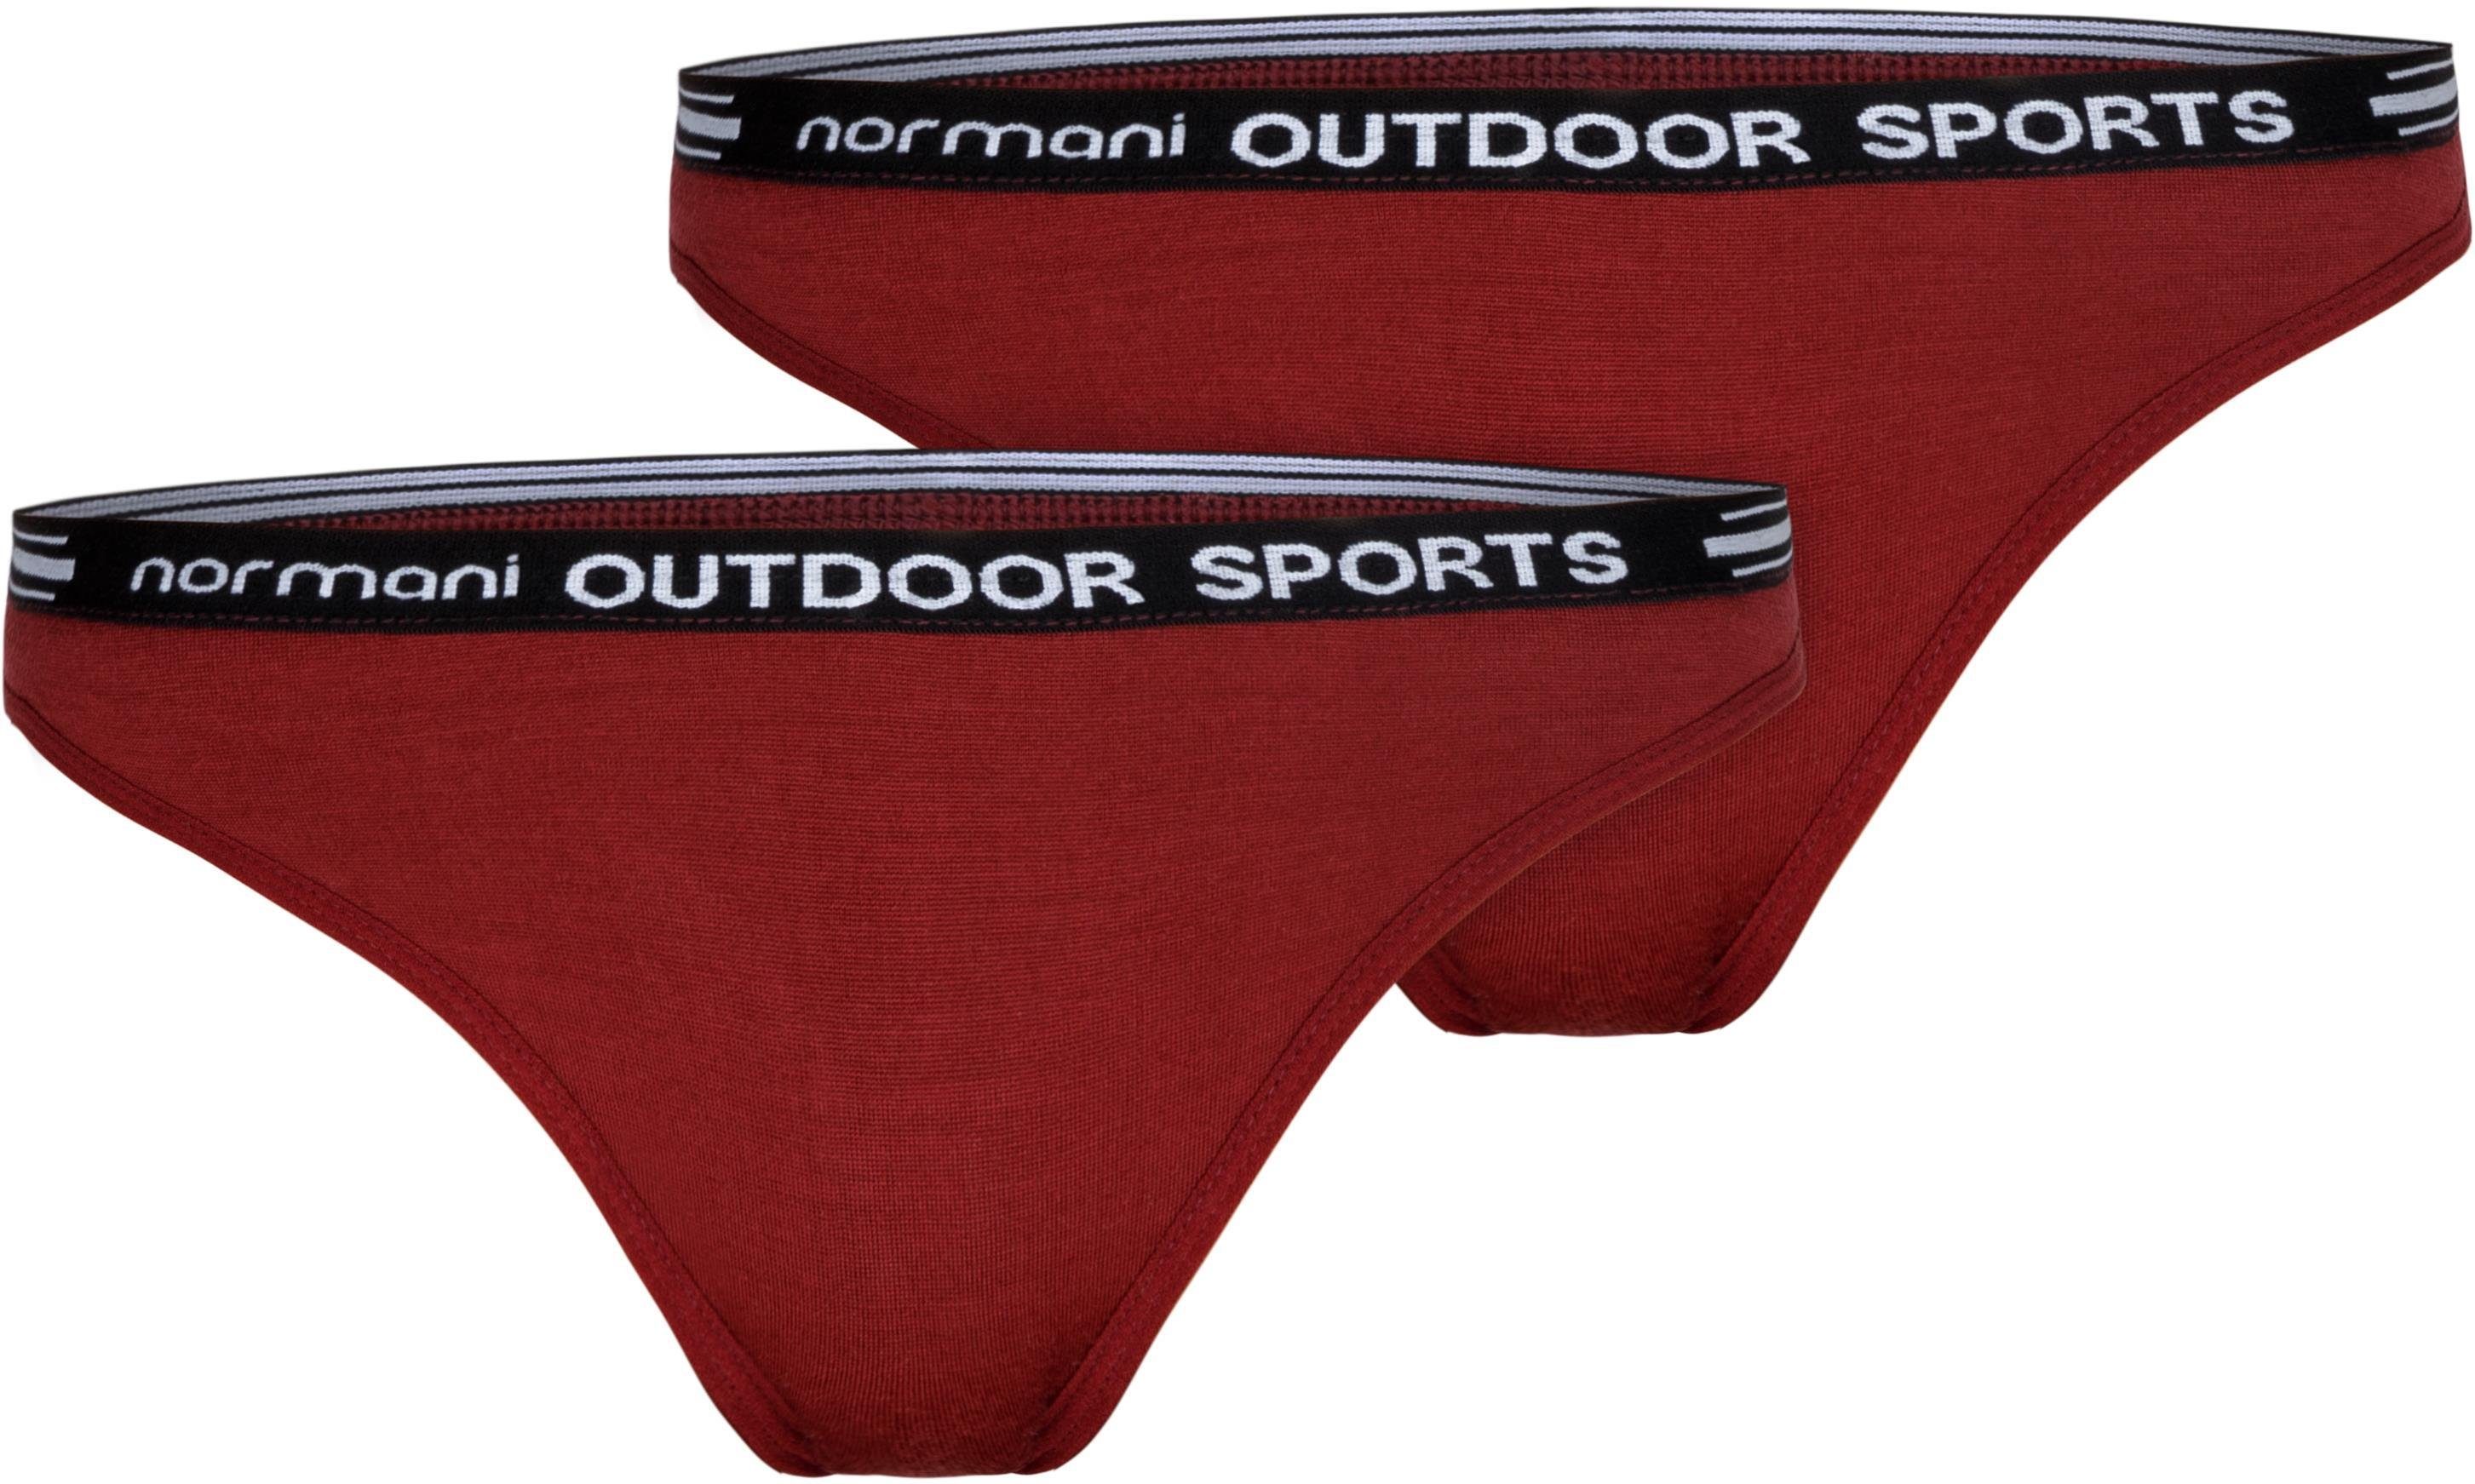 „Dubbo“ (1-St) Damen normani Tanga String 100% Outdoor Rot Unterhose 2er Sport Pack Tanga - Merino Bio-Merinowolle Merinounterwäsche